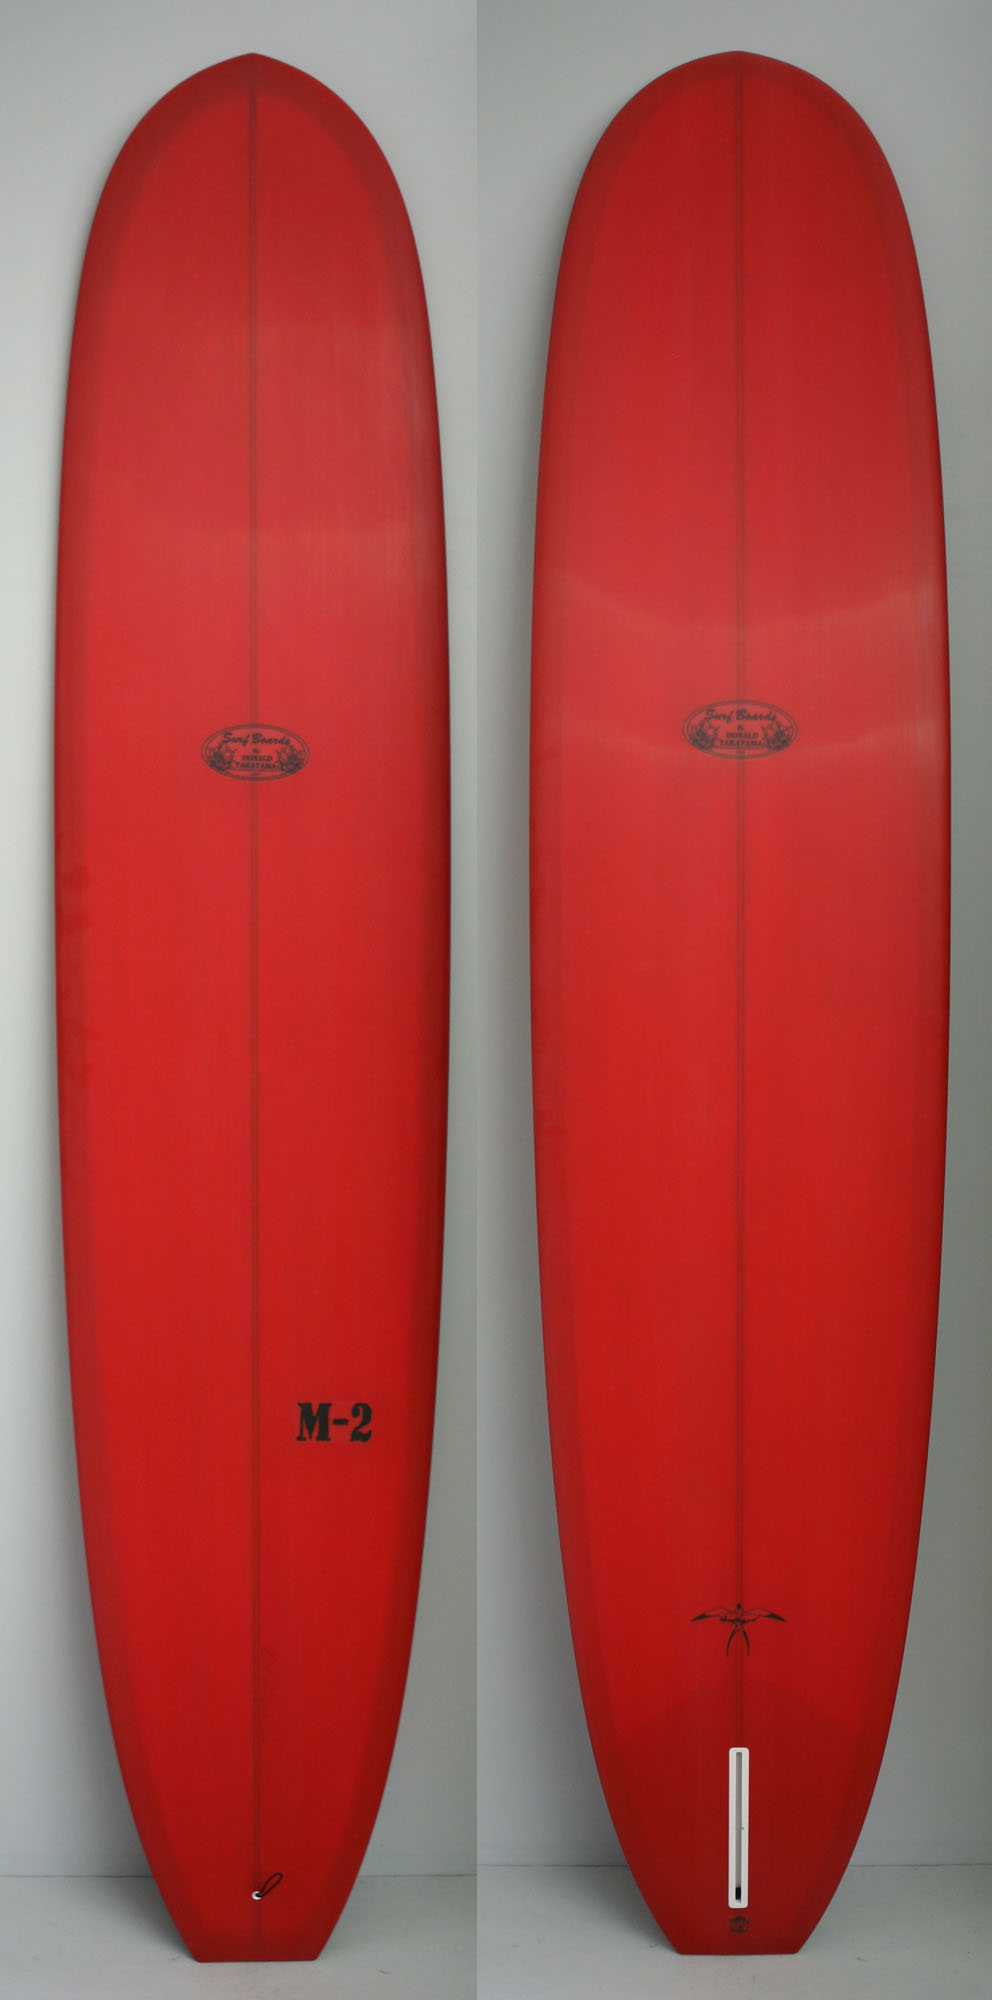 M-2 | Surfboards by Donald Takayama